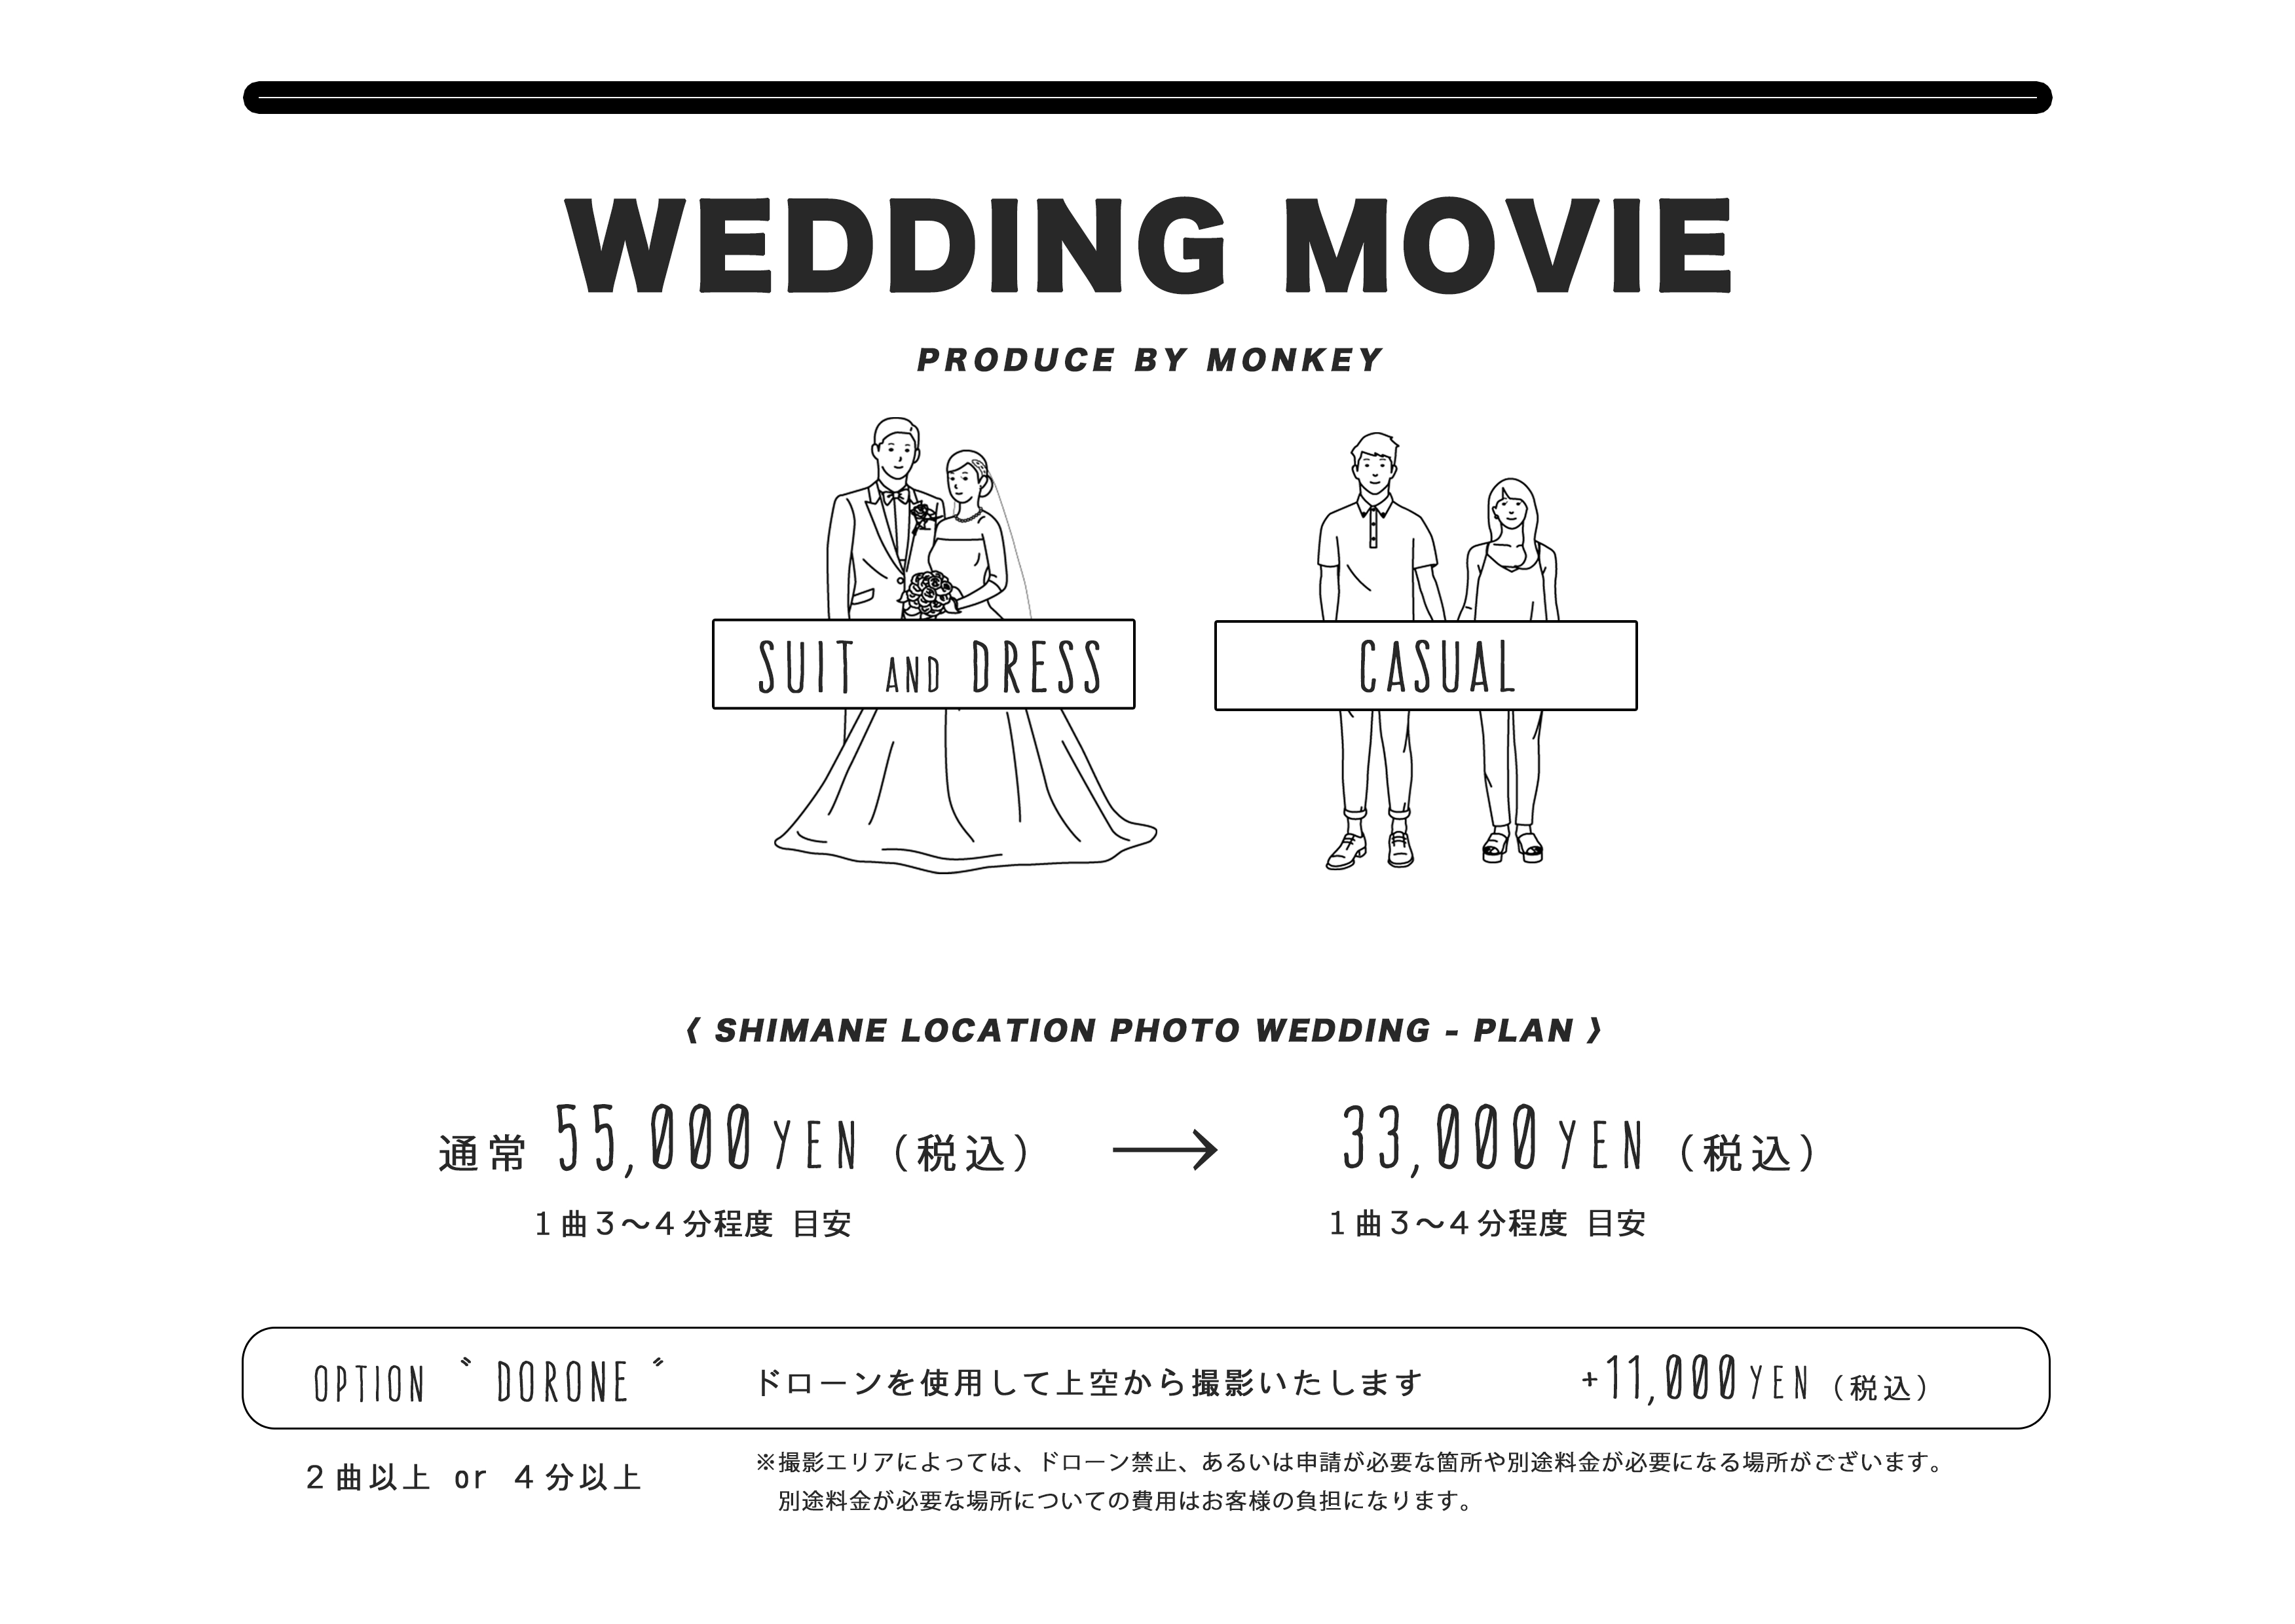 WEDDING MOVIE PRODUCE BY MONKEY